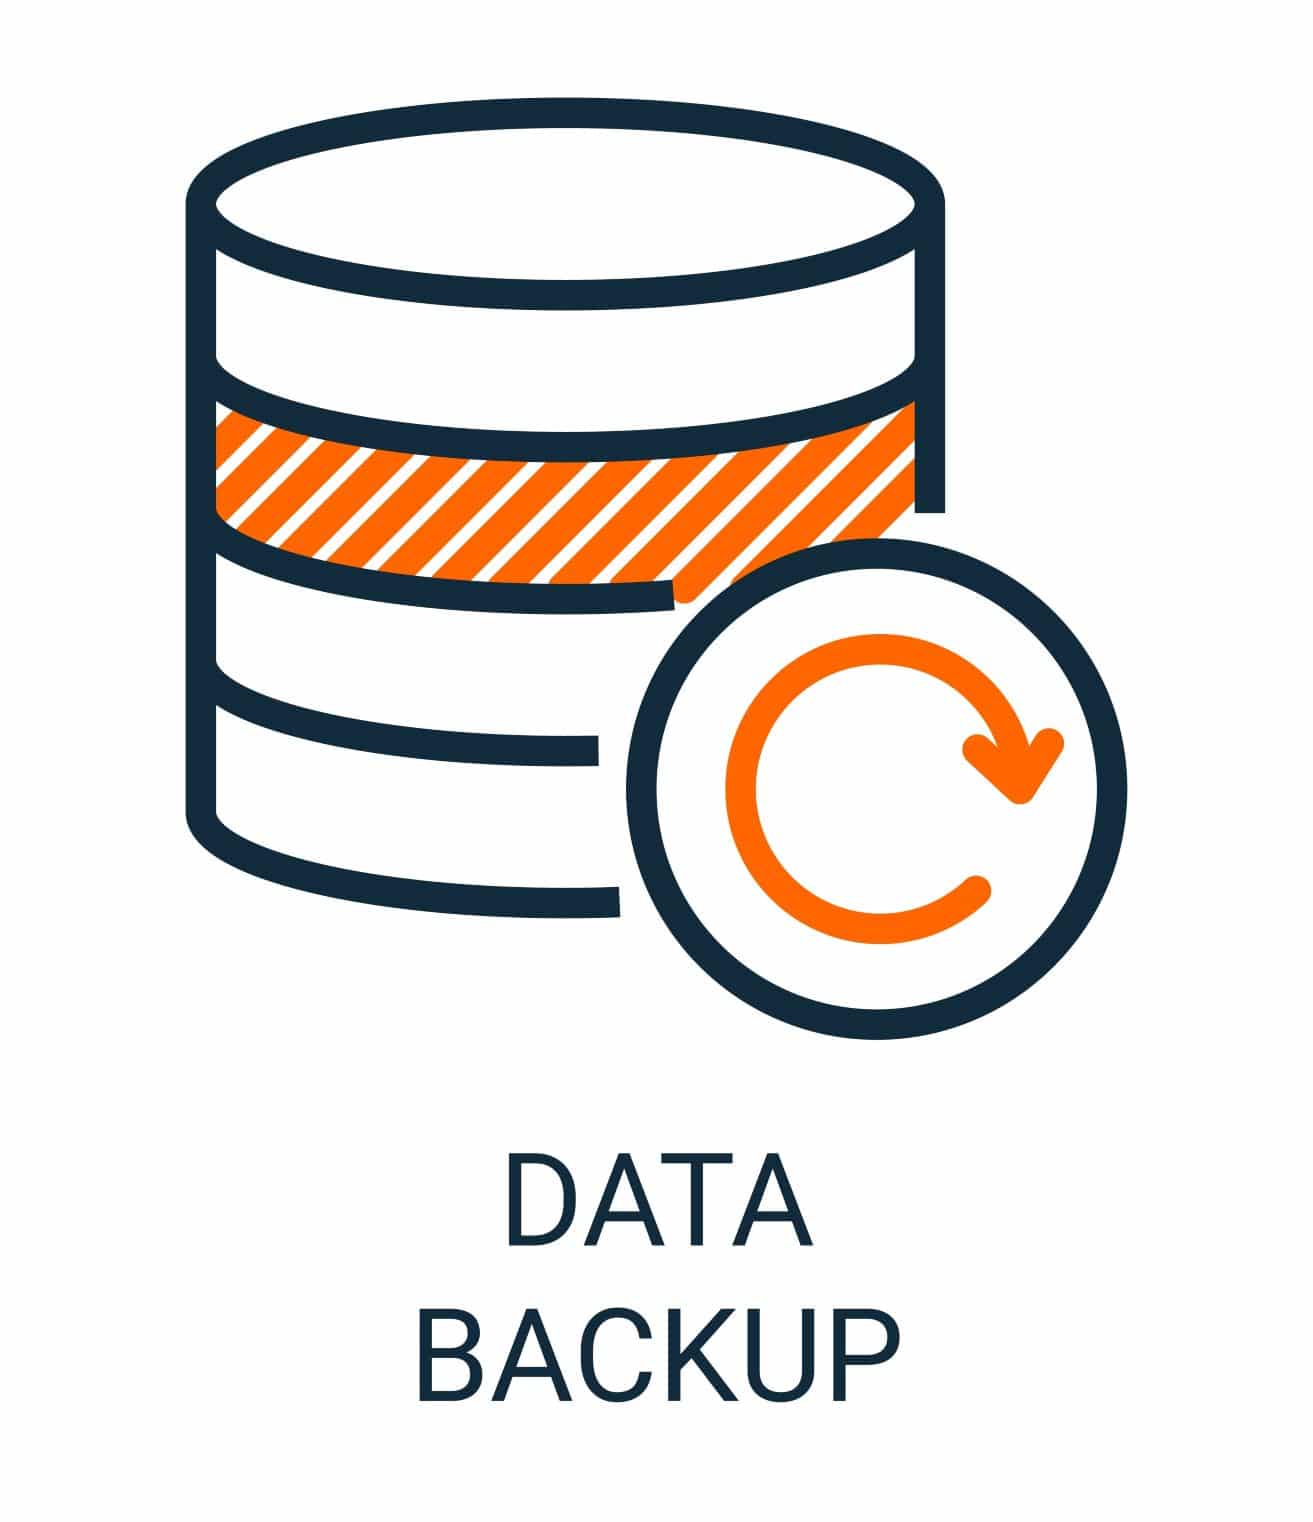 Data backup